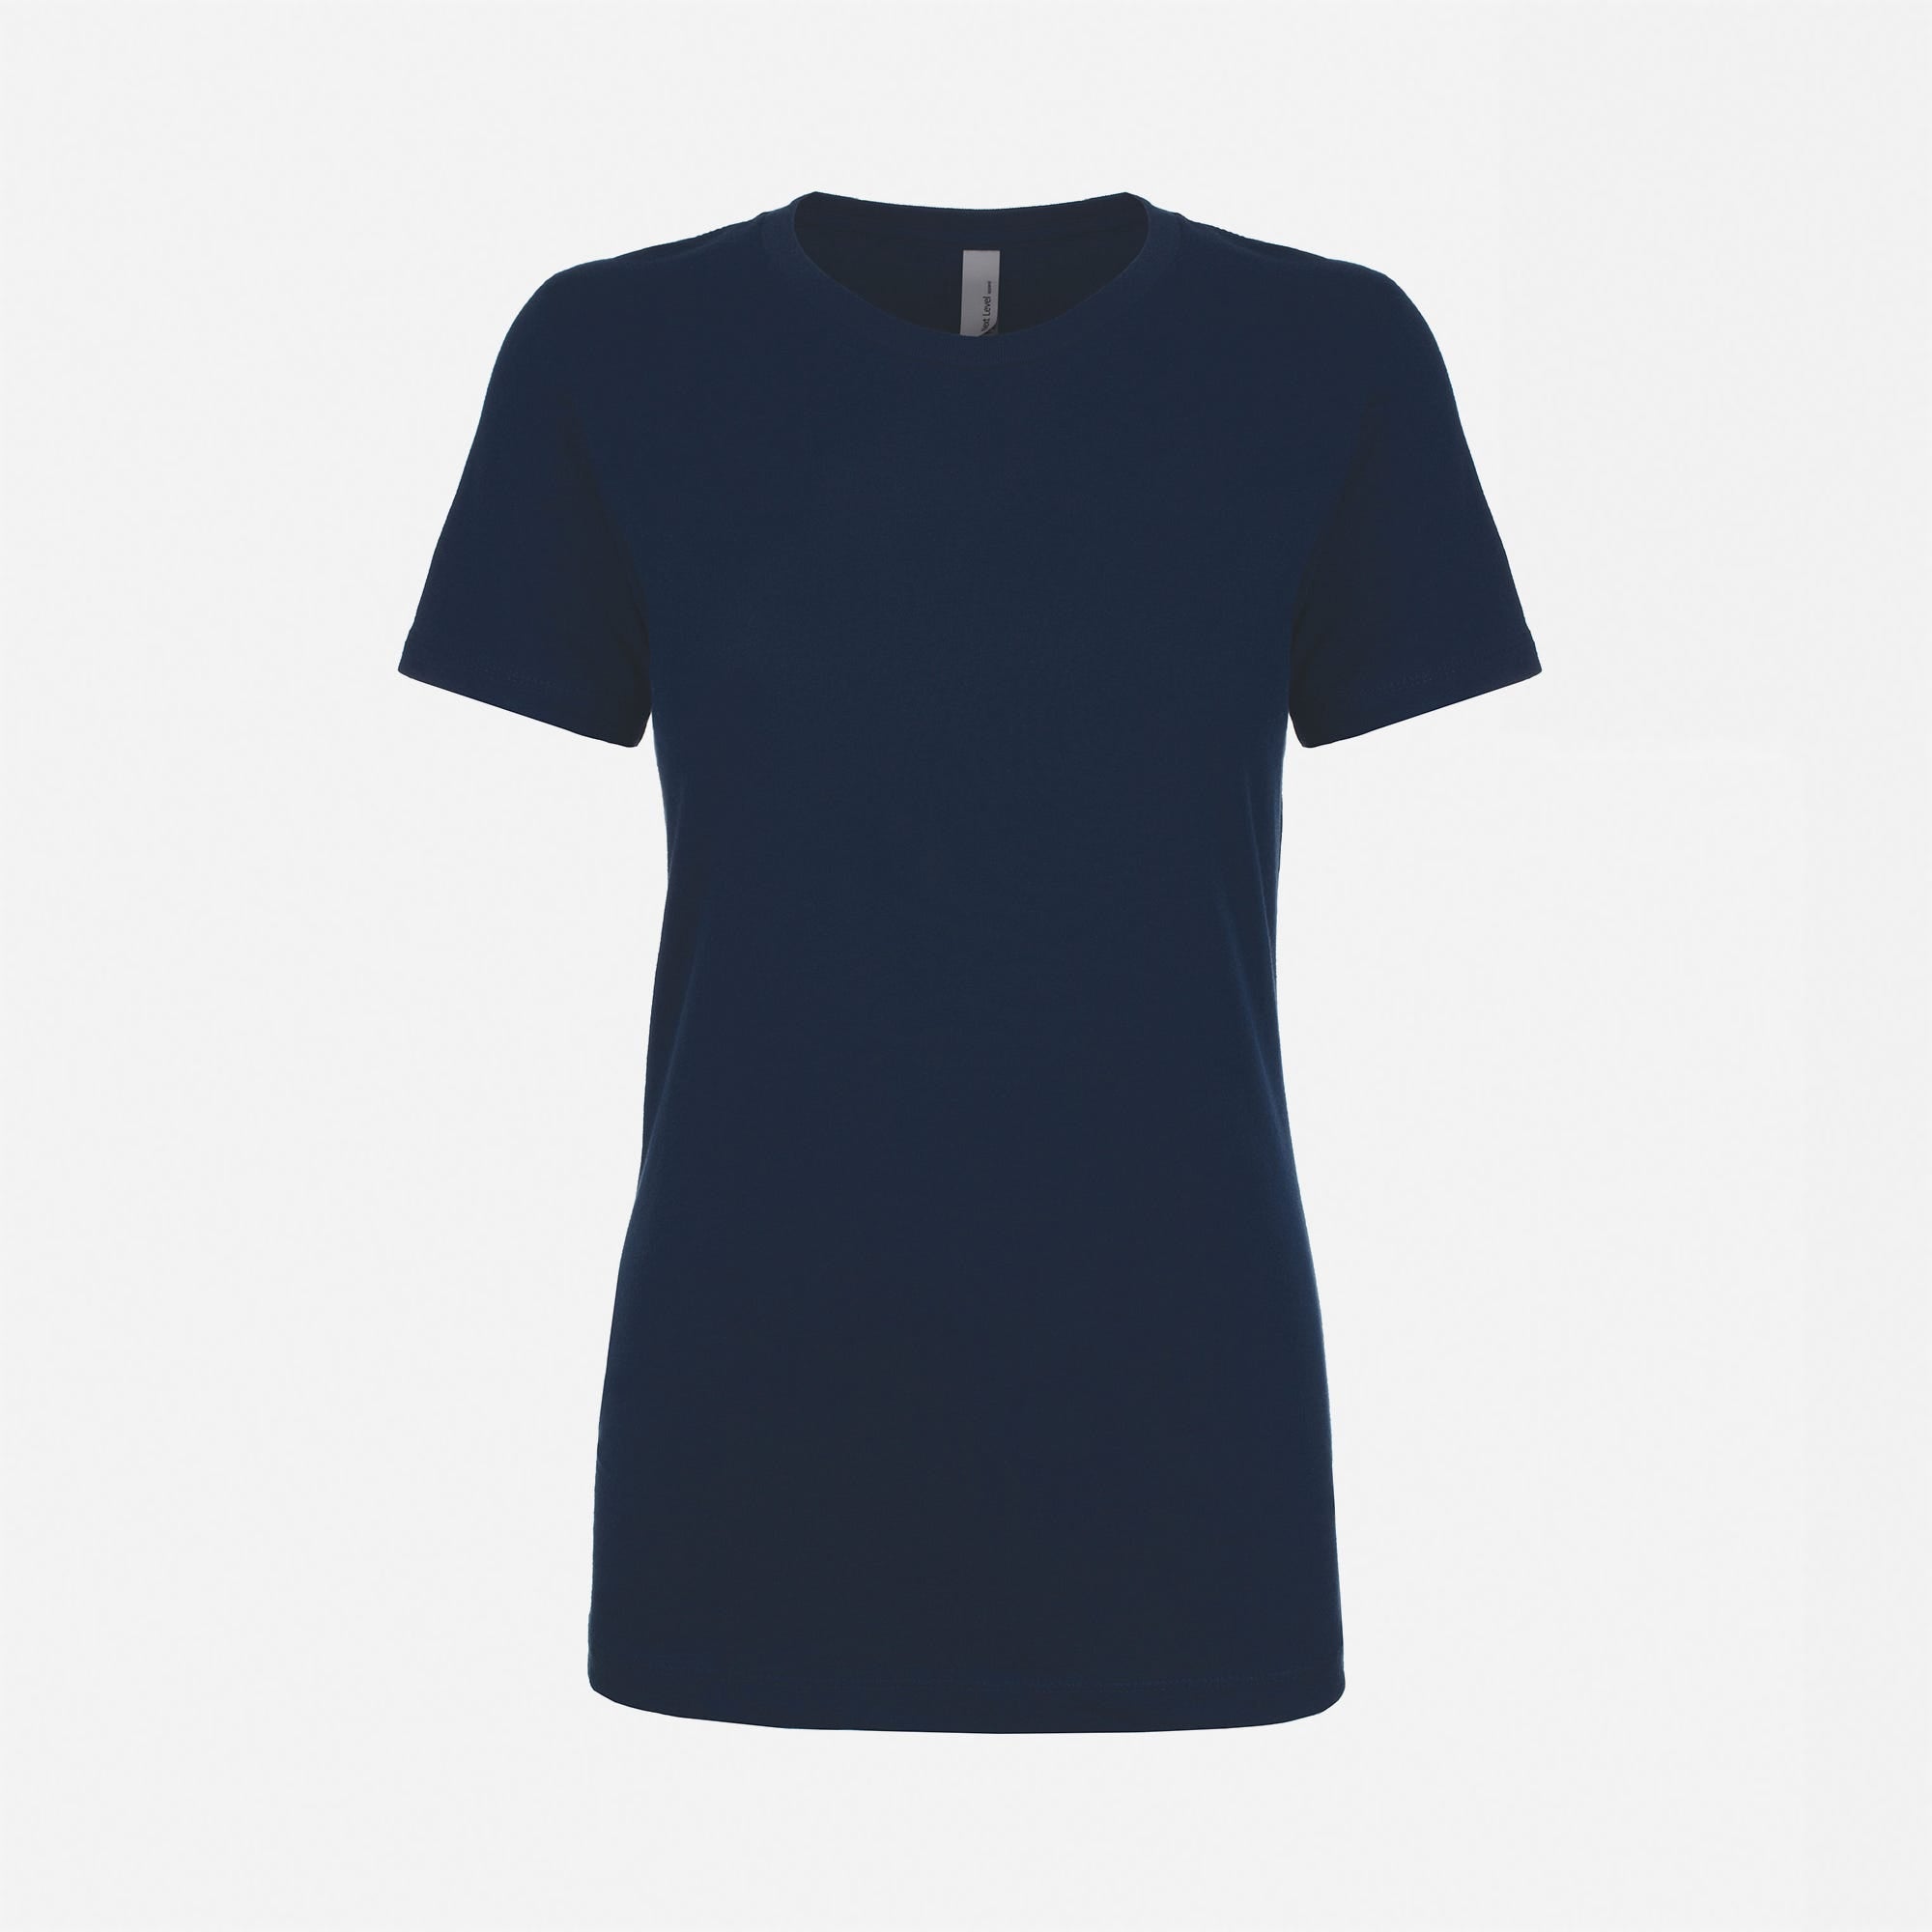 Cotton Boyfriend T-Shirt Midnight Navy 3900 Next Level Apparel Women's T-shirt Front View